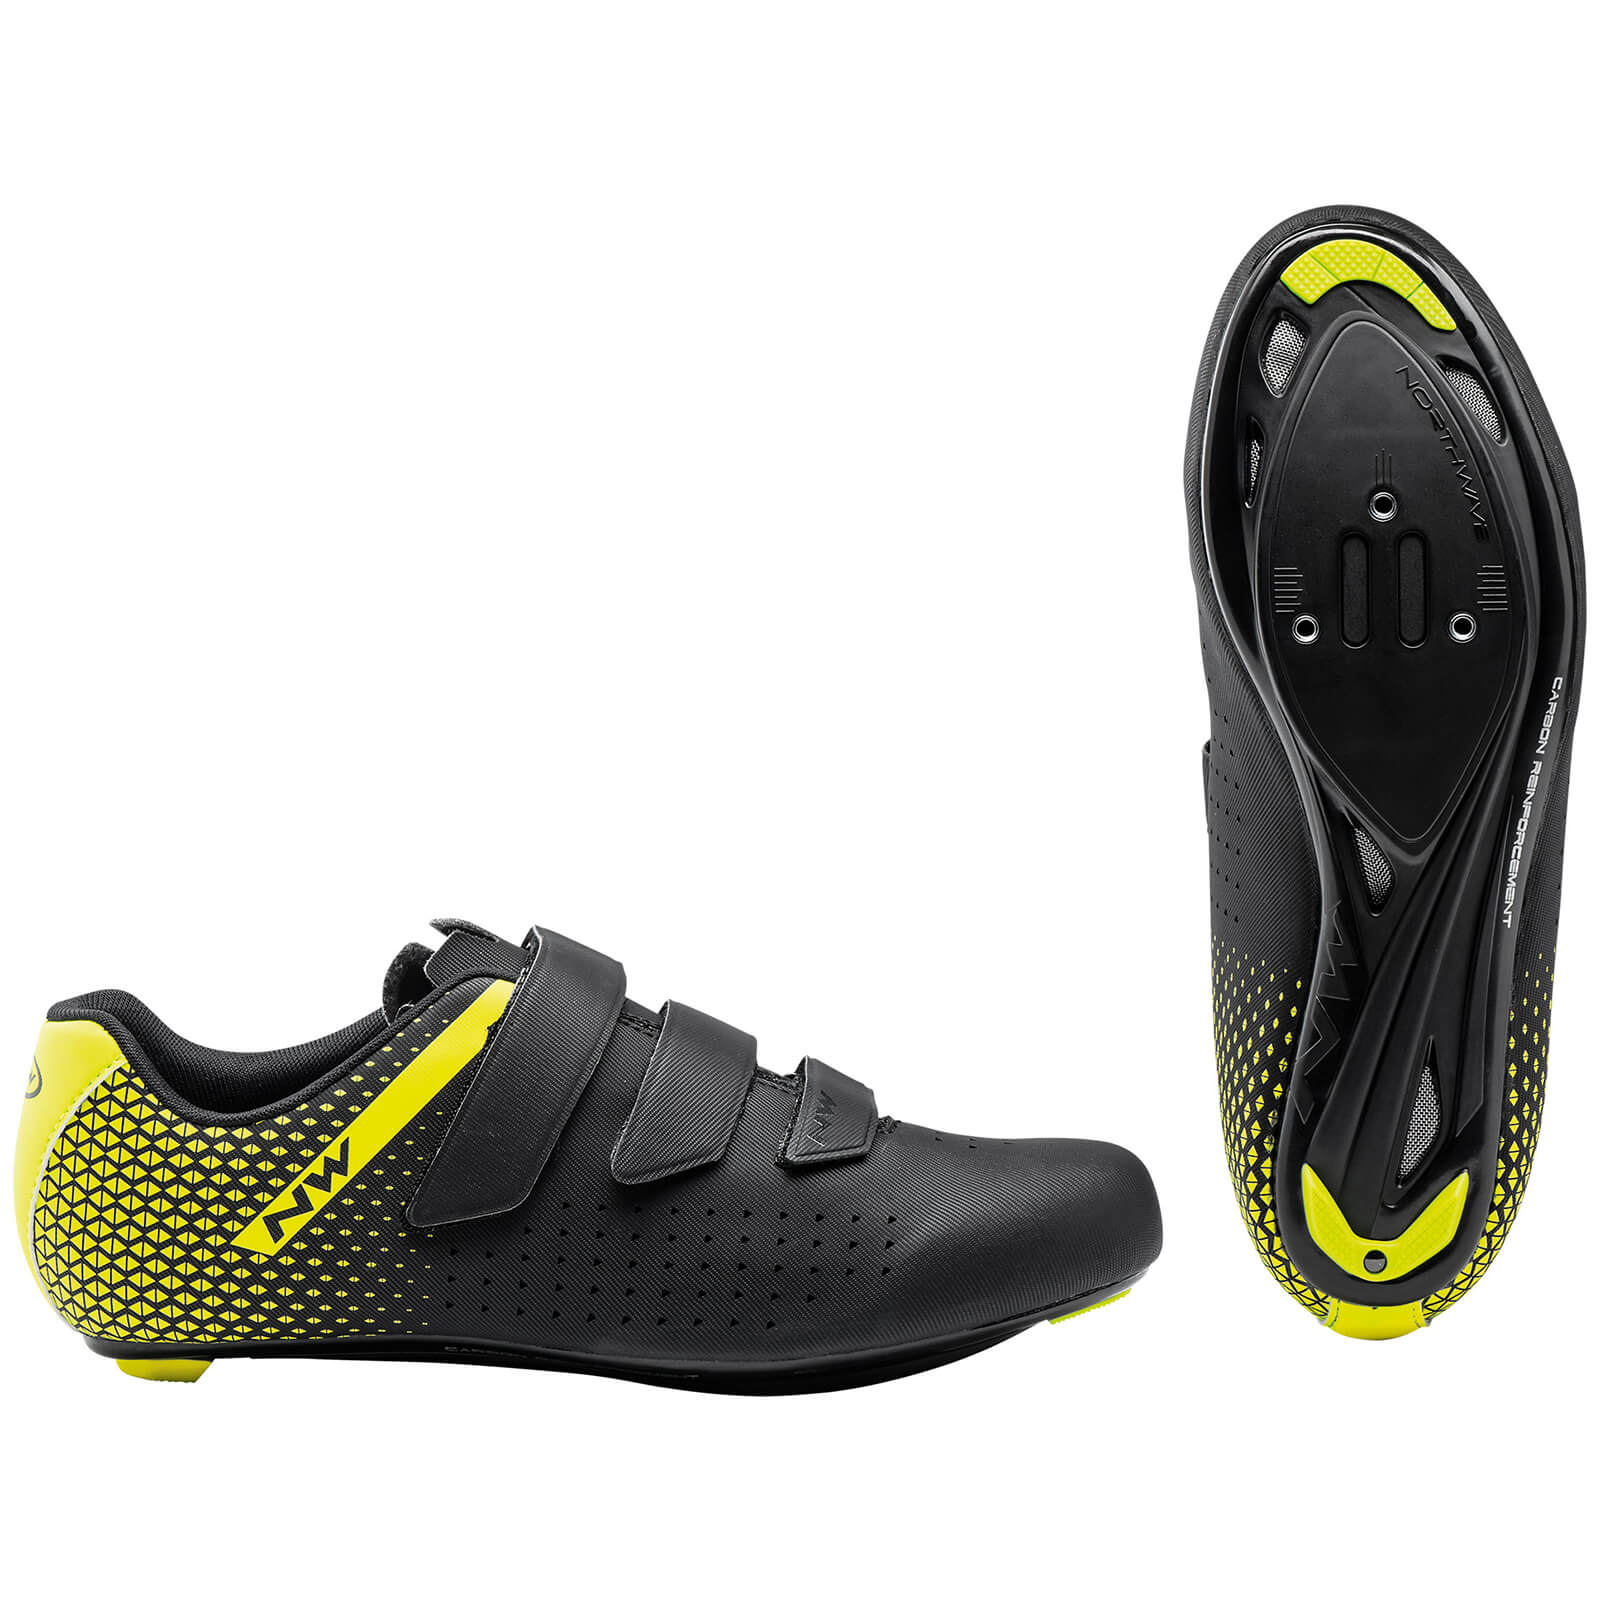 Northwave Core 2 Road Shoes - EU44 - Black/Yellow Fluo